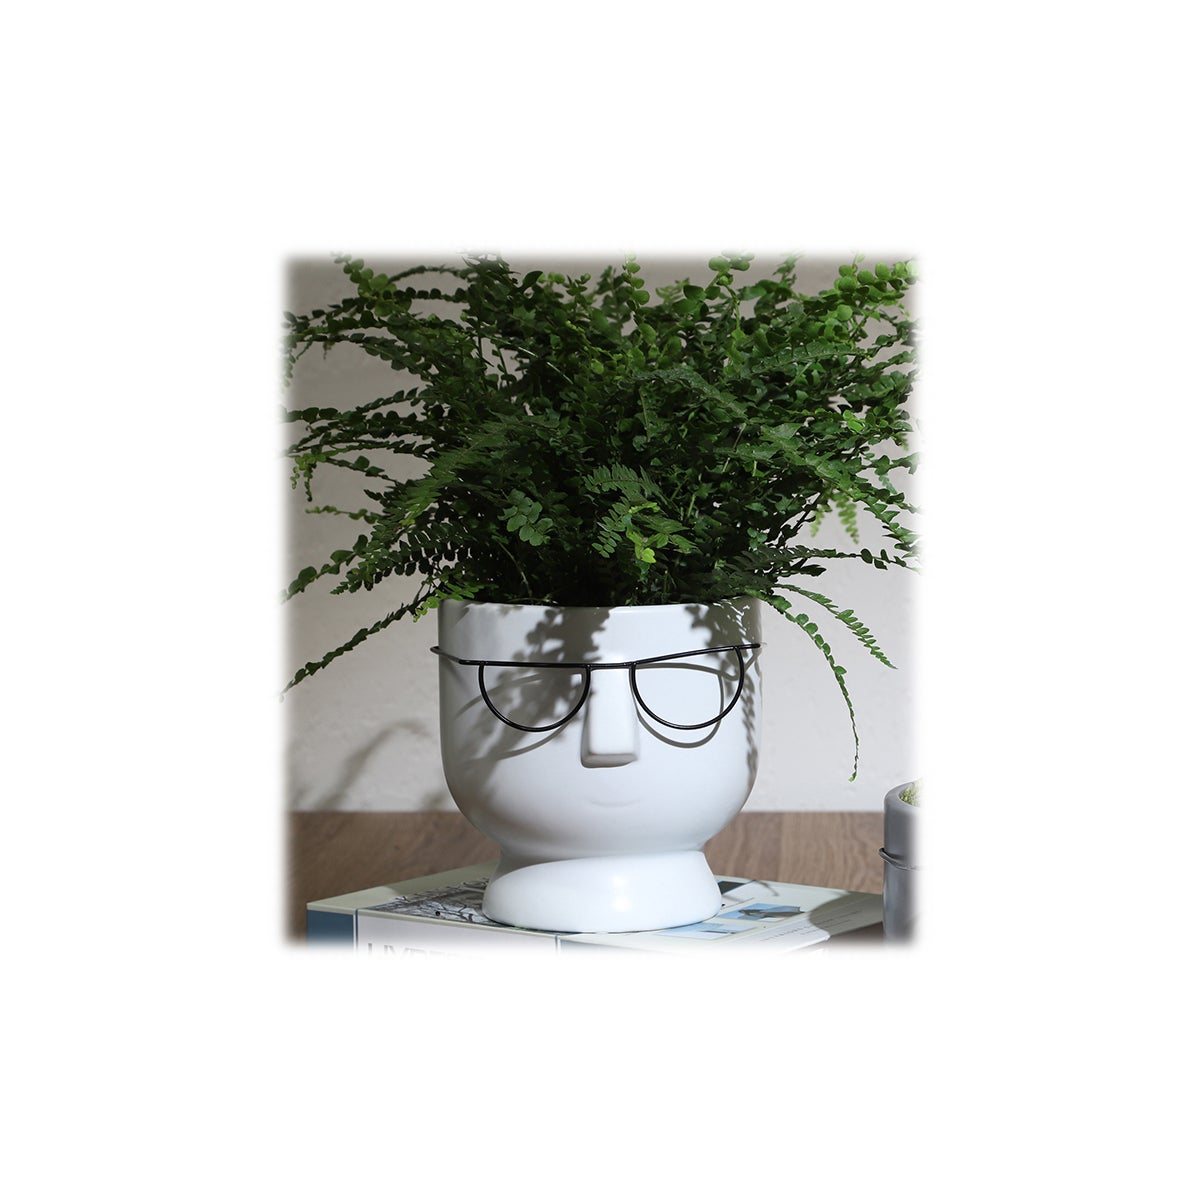 Face w/Glasses Vase Planter